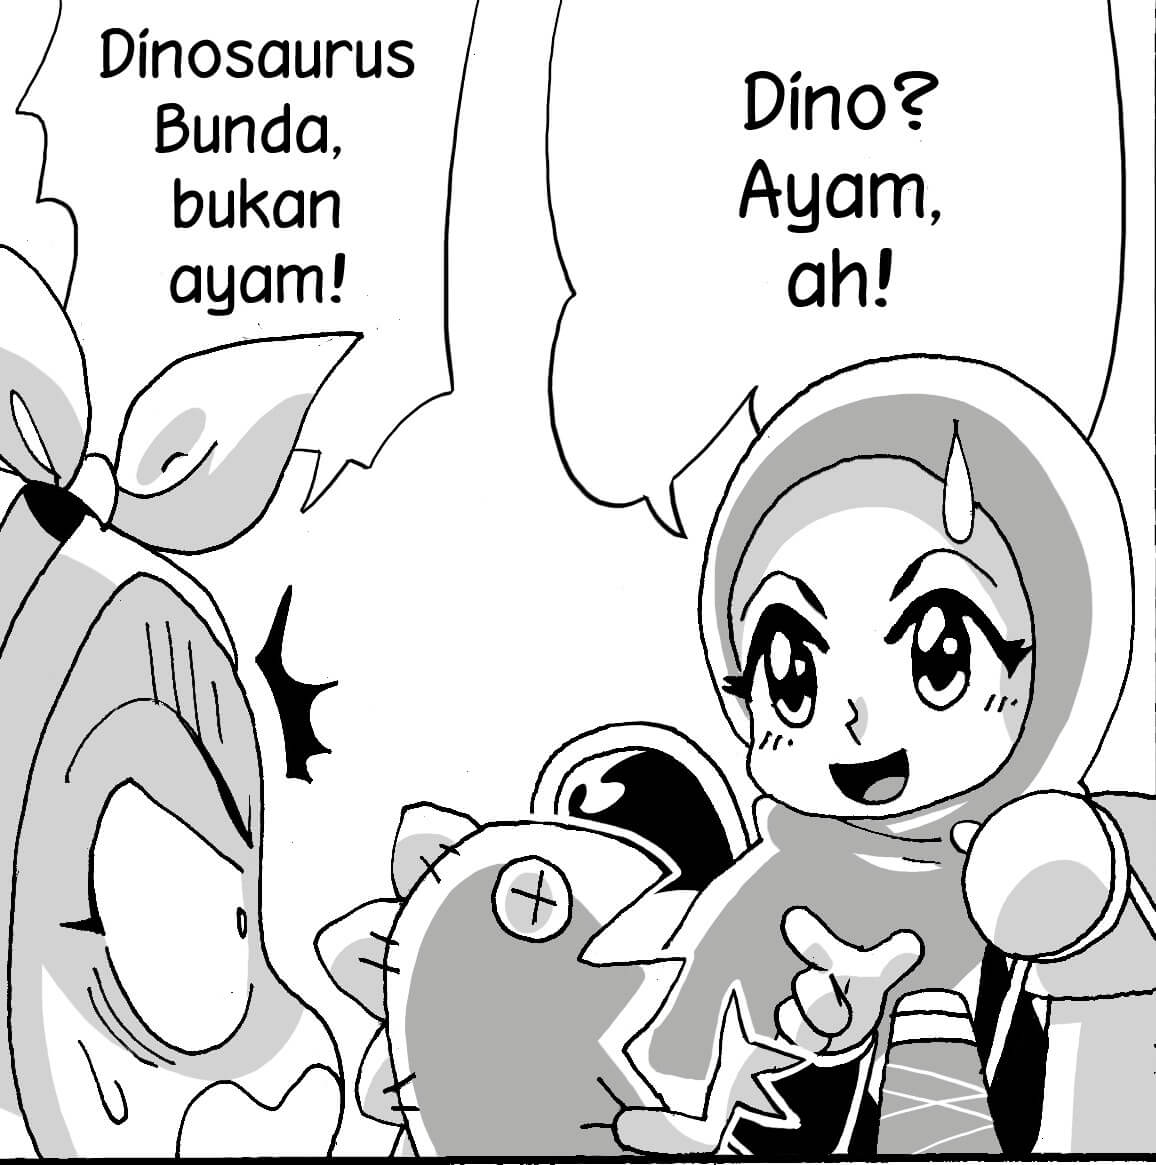 Dinosaurus vs ayam 2